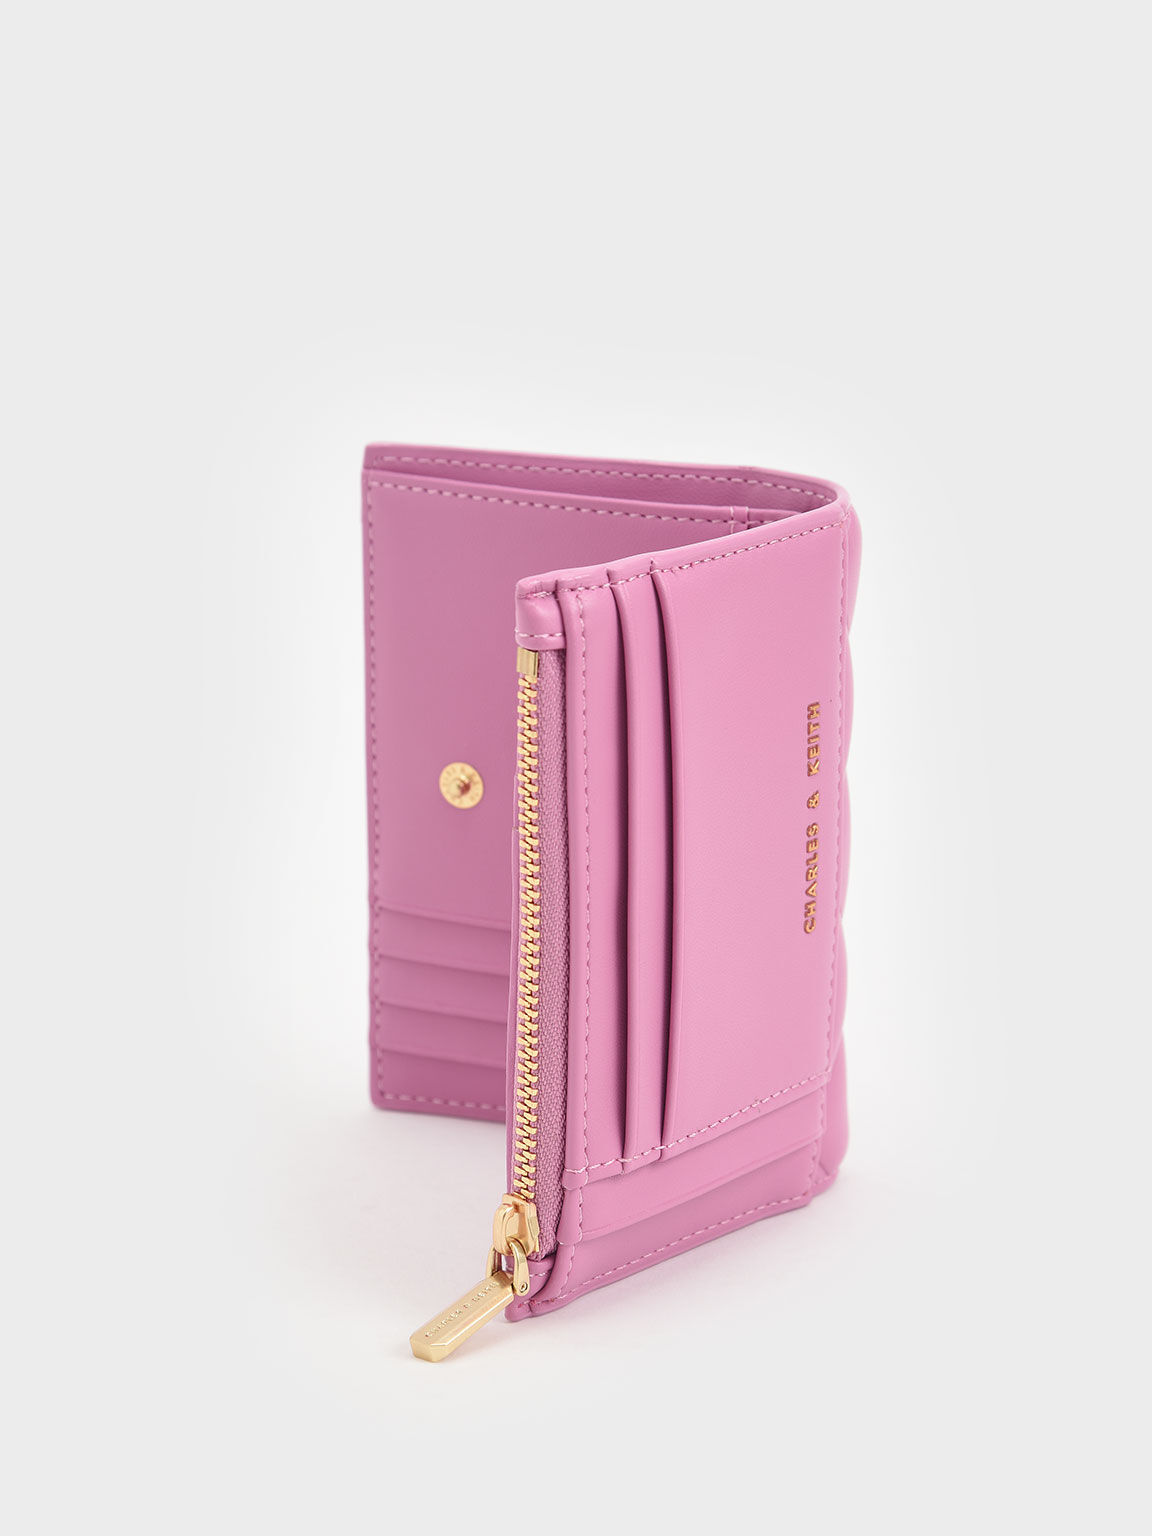 Gemma 菱格拉鍊票卡夾, 粉紅色, hi-res